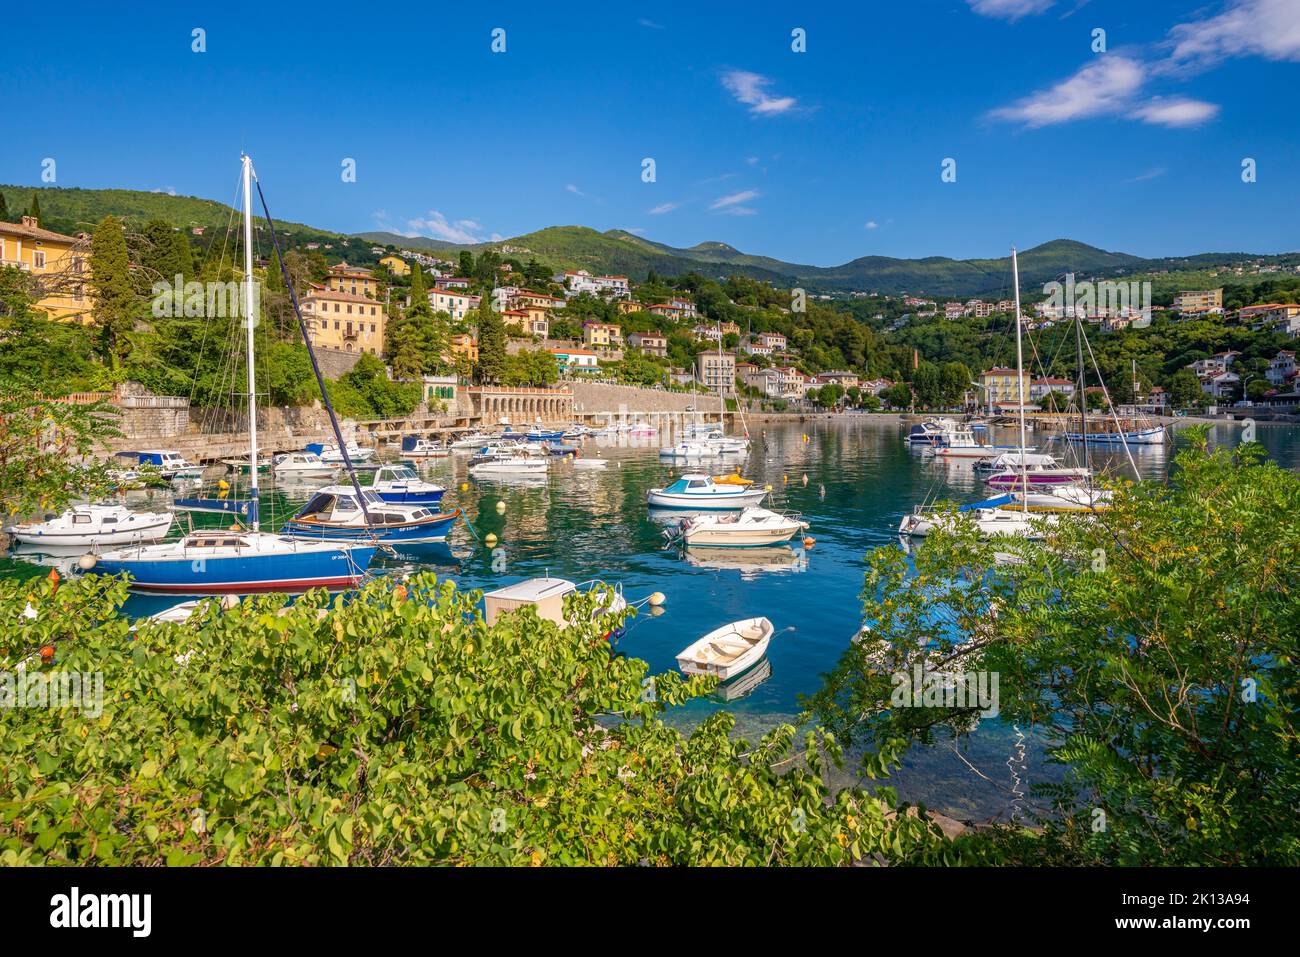 View of boats in the bay at Ika, Kvarner Bay, Eastern Istria, Croatia, Europe Stock Photo